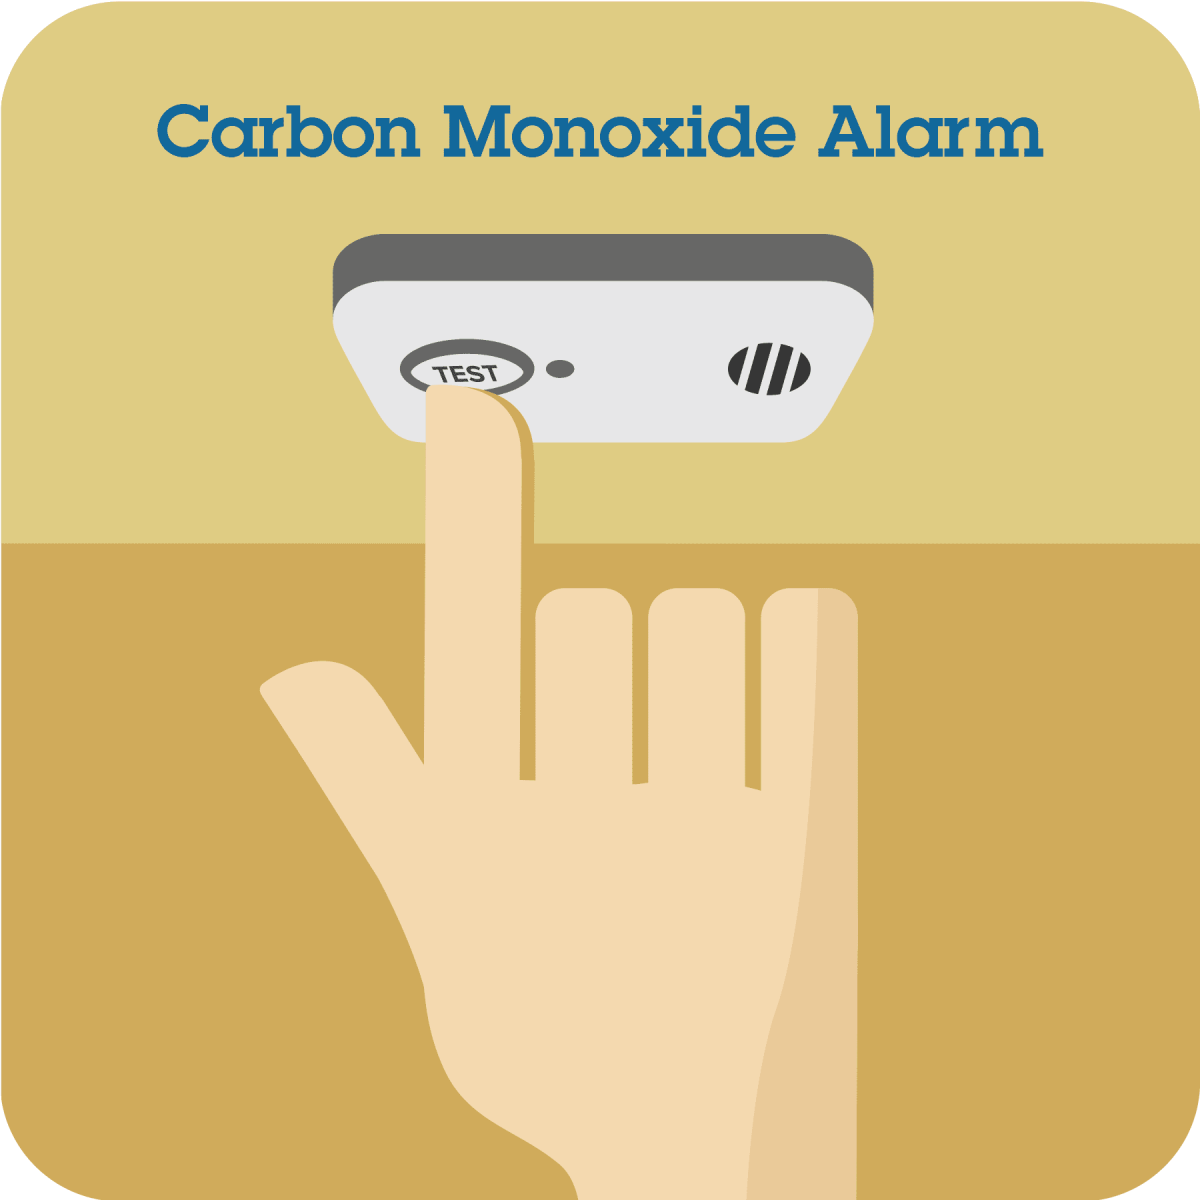 Finger pressing the Test button on a Carbon Monoxide Alarm, Pictogram Courtesy of FEMA